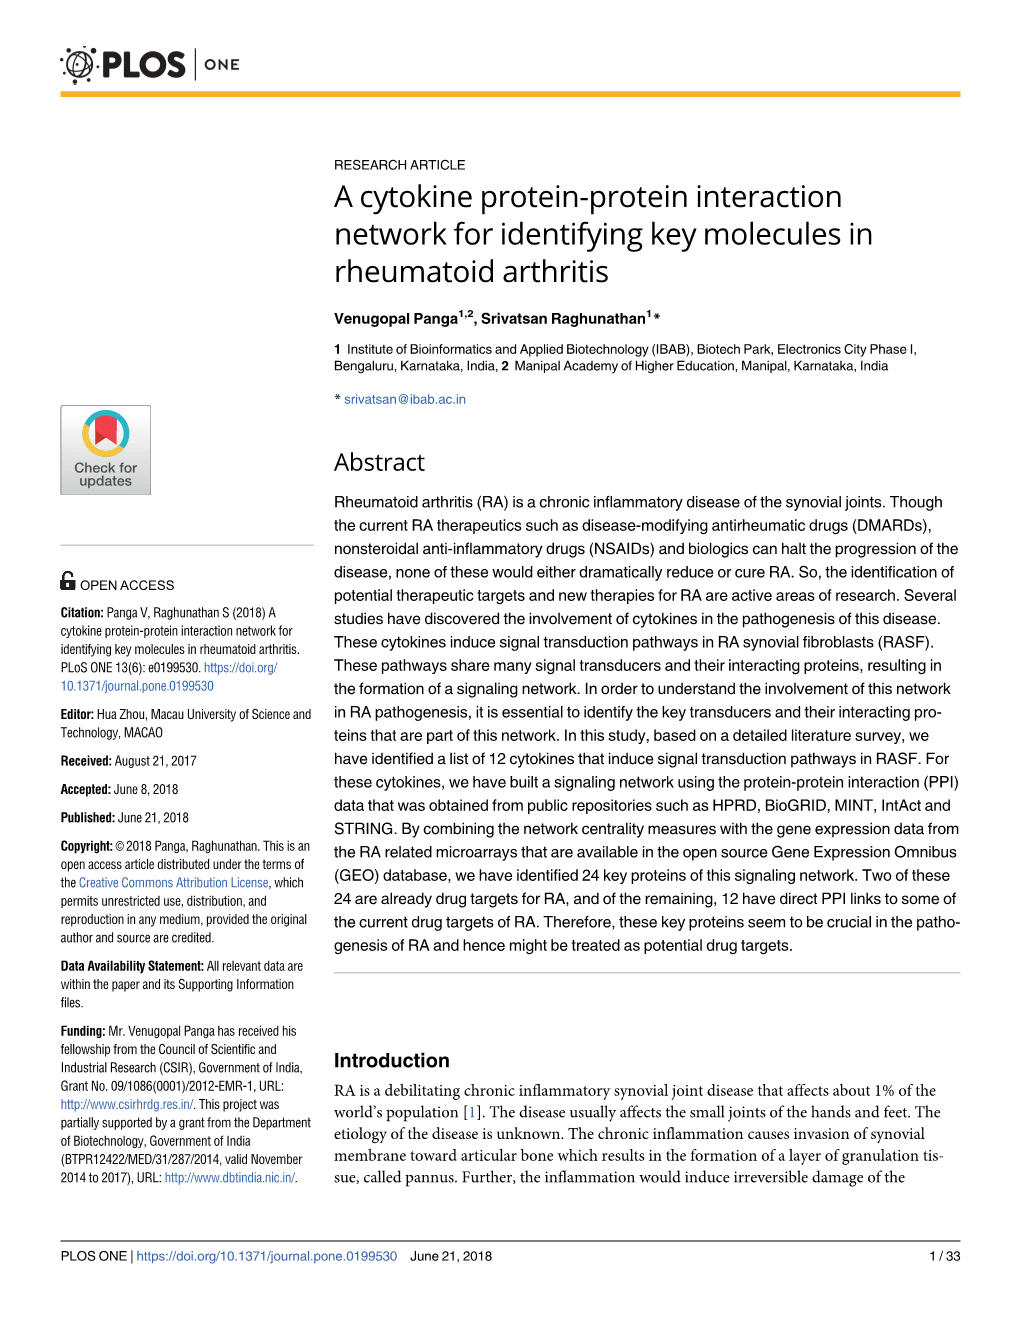 A Cytokine Protein-Protein Interaction Network for Identifying Key Molecules in Rheumatoid Arthritis